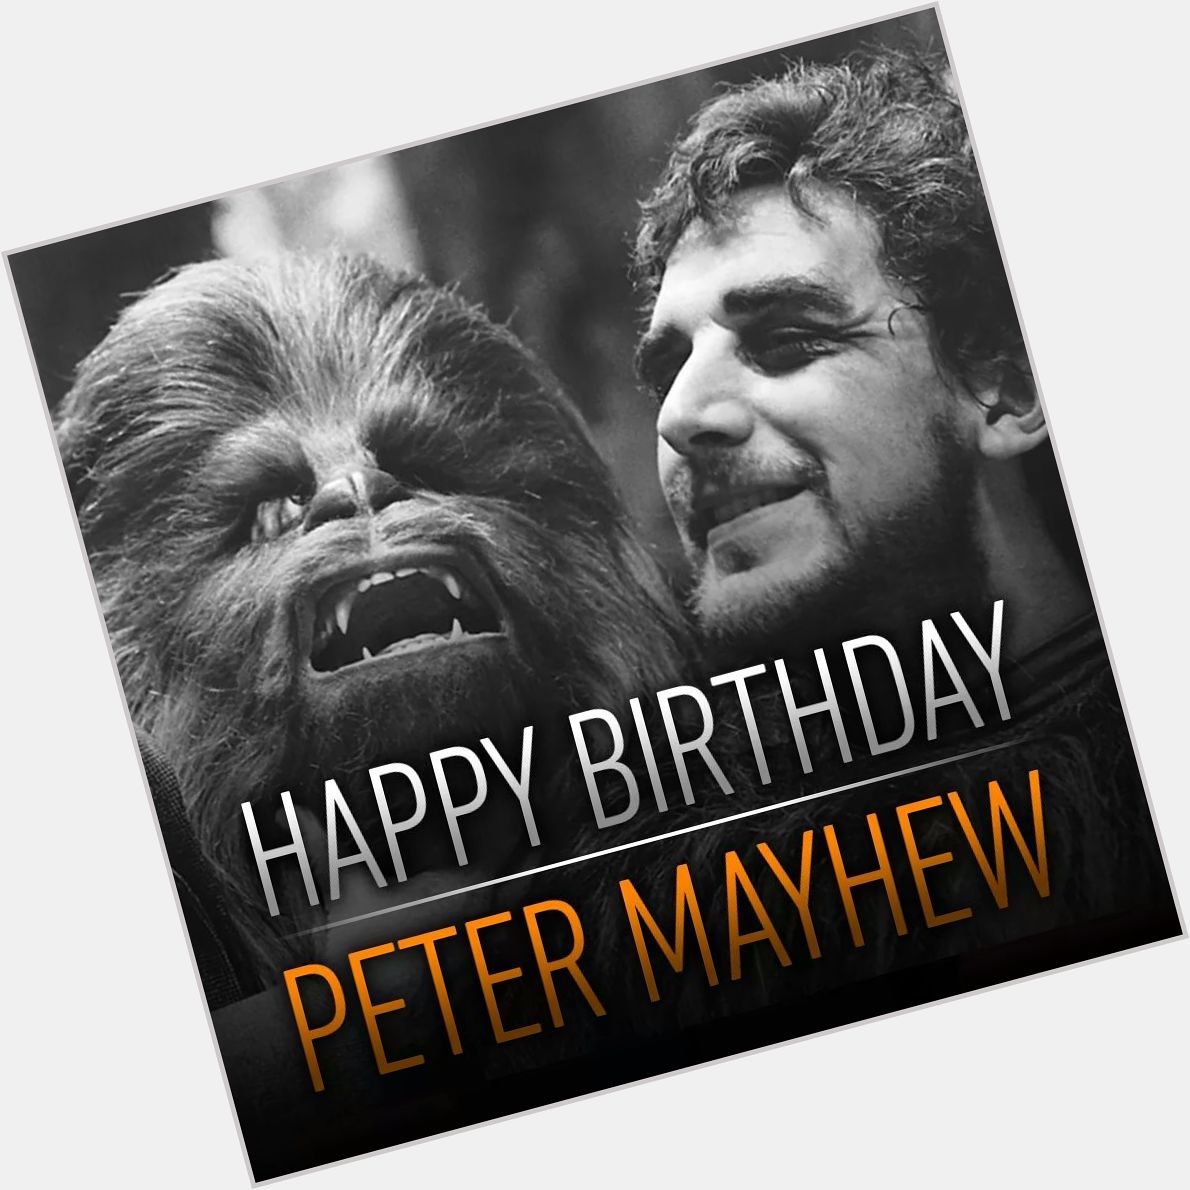  would like to wish Peter Mayhew a happy birthday 